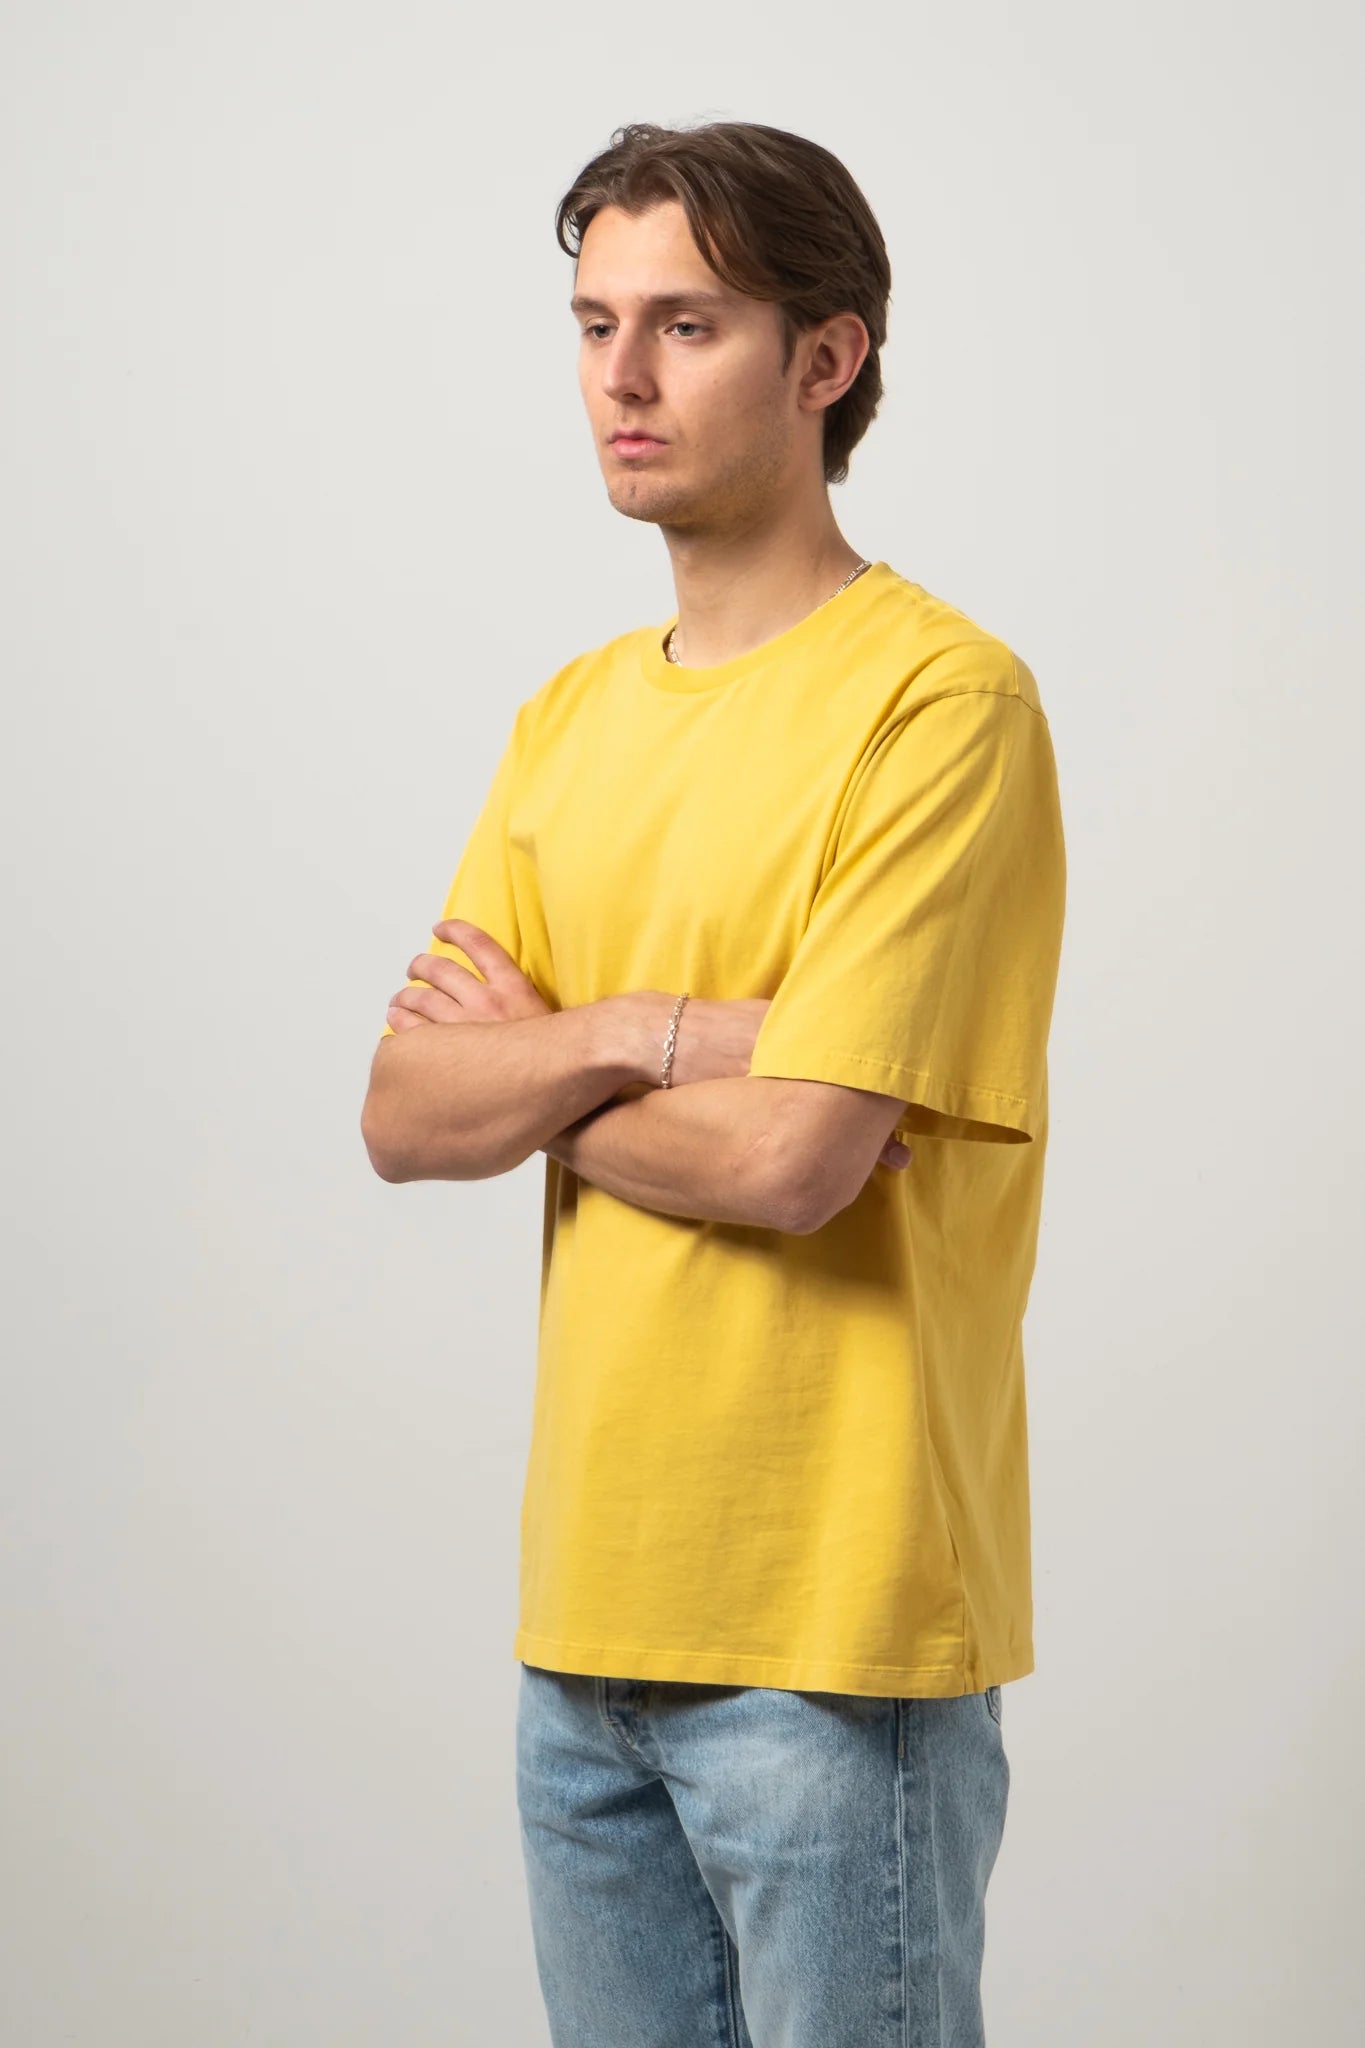 C.O.F. Studio Crewneck T-Shirt in mustard